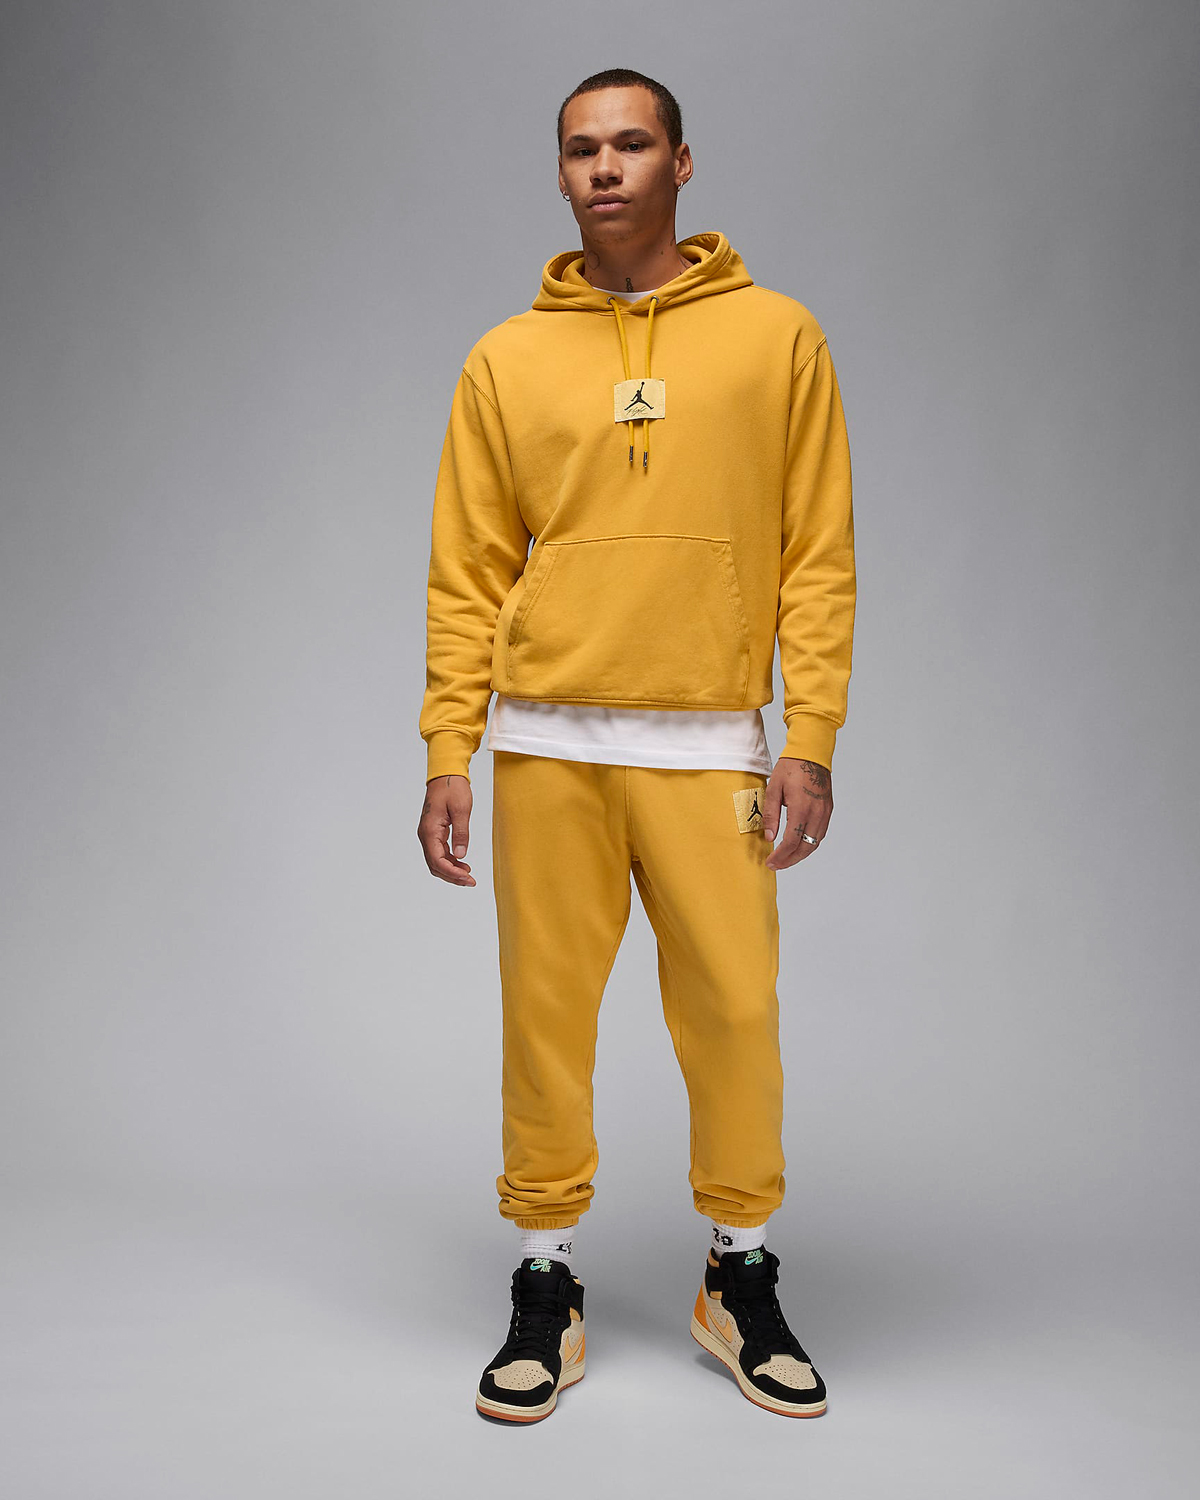 Jordan-Essentials-Fleece-Washed-Hoodie-Pants-Yellow-Ochre-Sneaker-Outfit